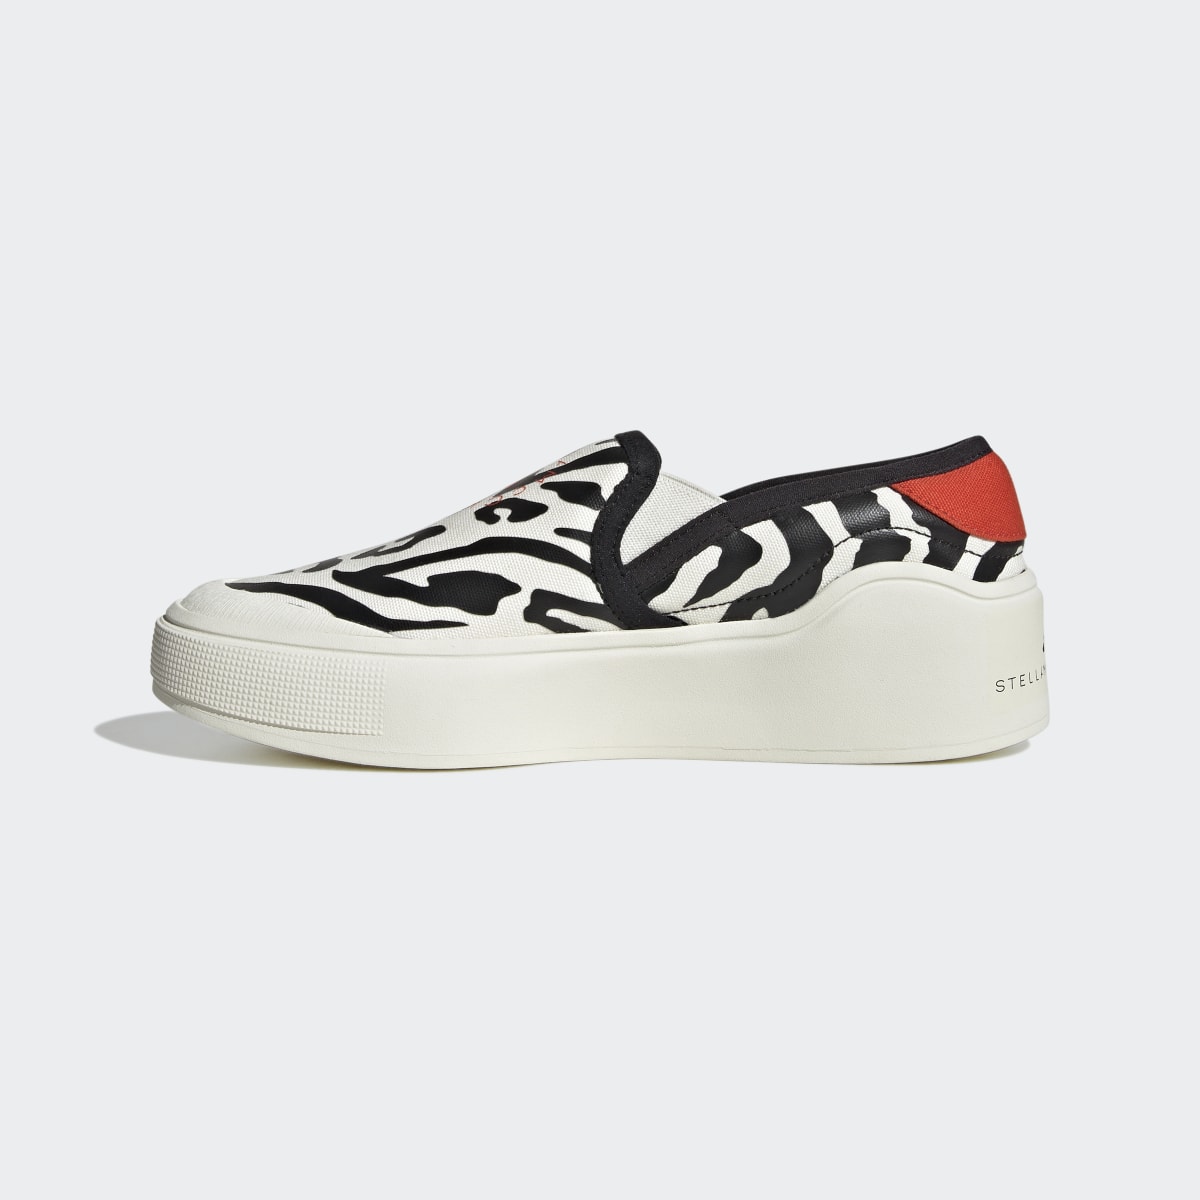 Adidas by Stella McCartney Court Slip-On Shoes. 7